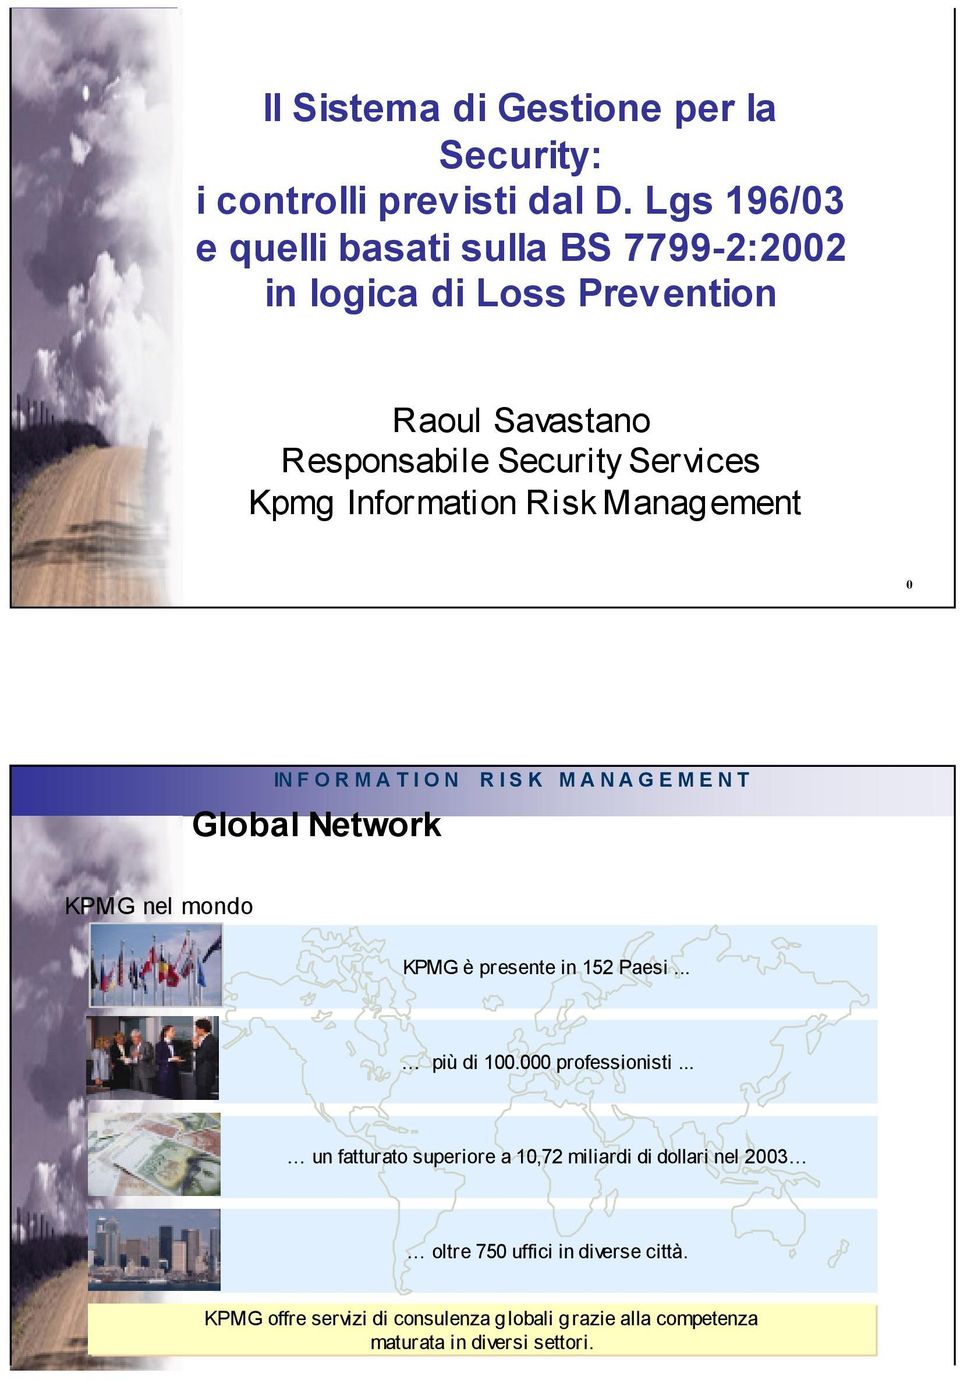 Kpmg Information Risk 0 Global Network KPMG nel mondo KPMG è presente in 152 Paesi... più di 100.000 professionisti.